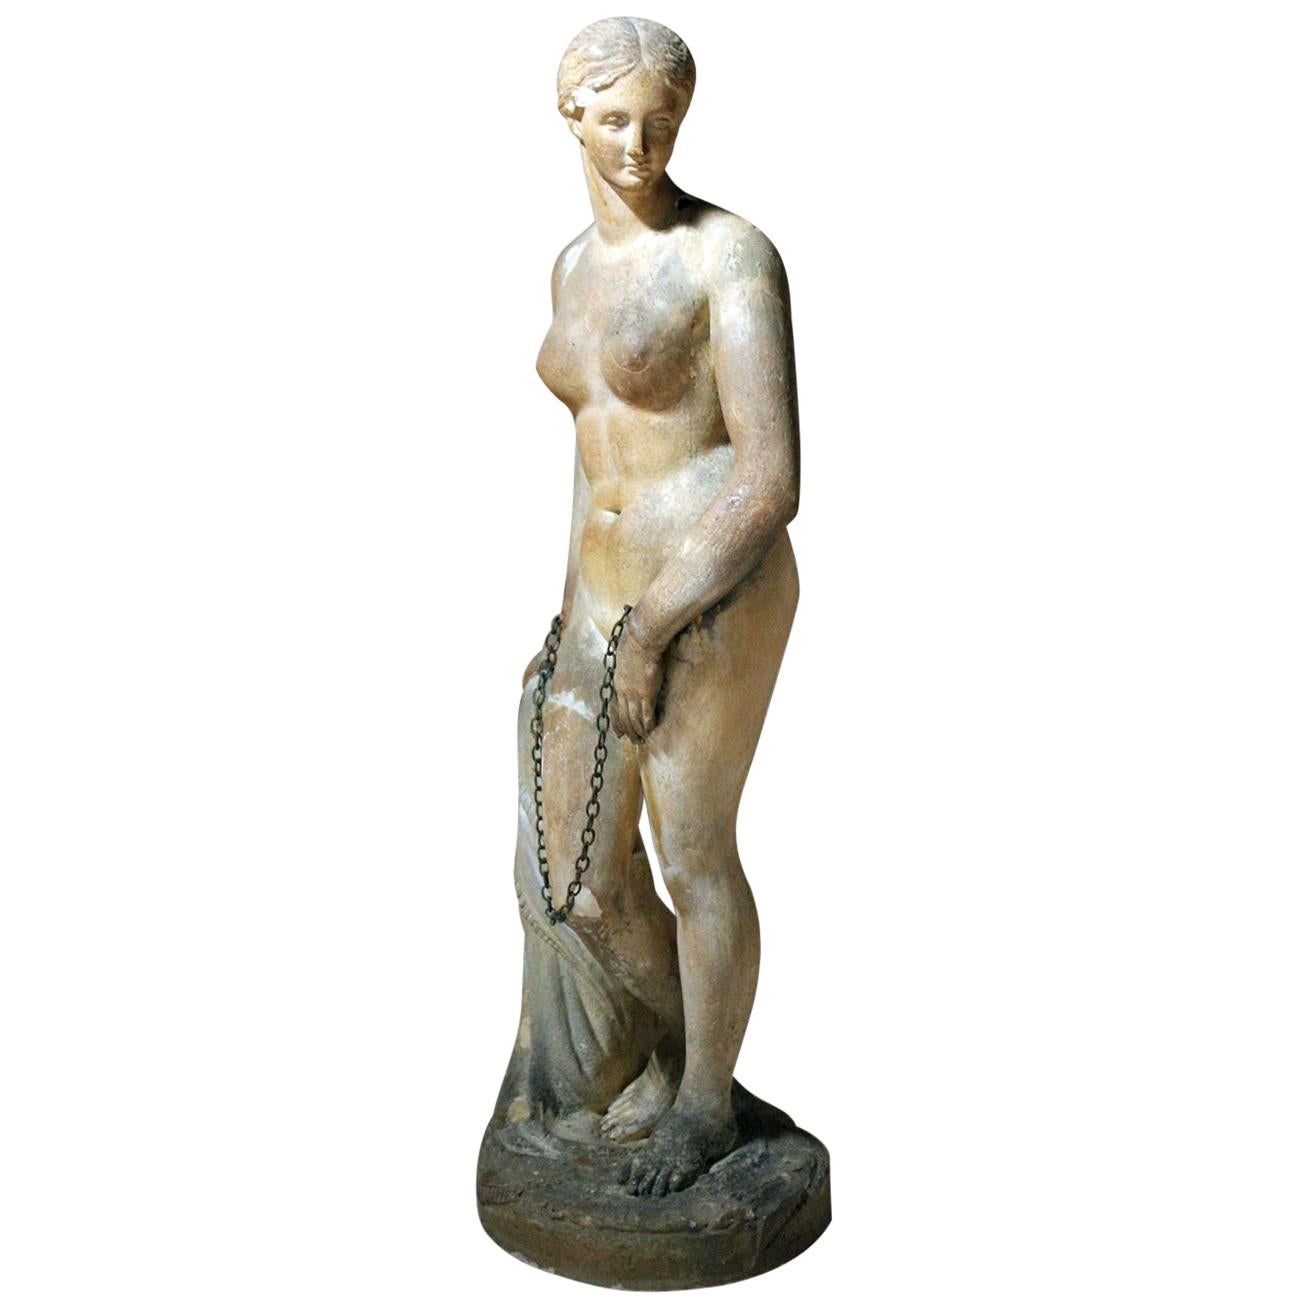 Mid-19th Century Plaster Figure ‘The Greek Slave’ after Hiram Powers, c.1844-70